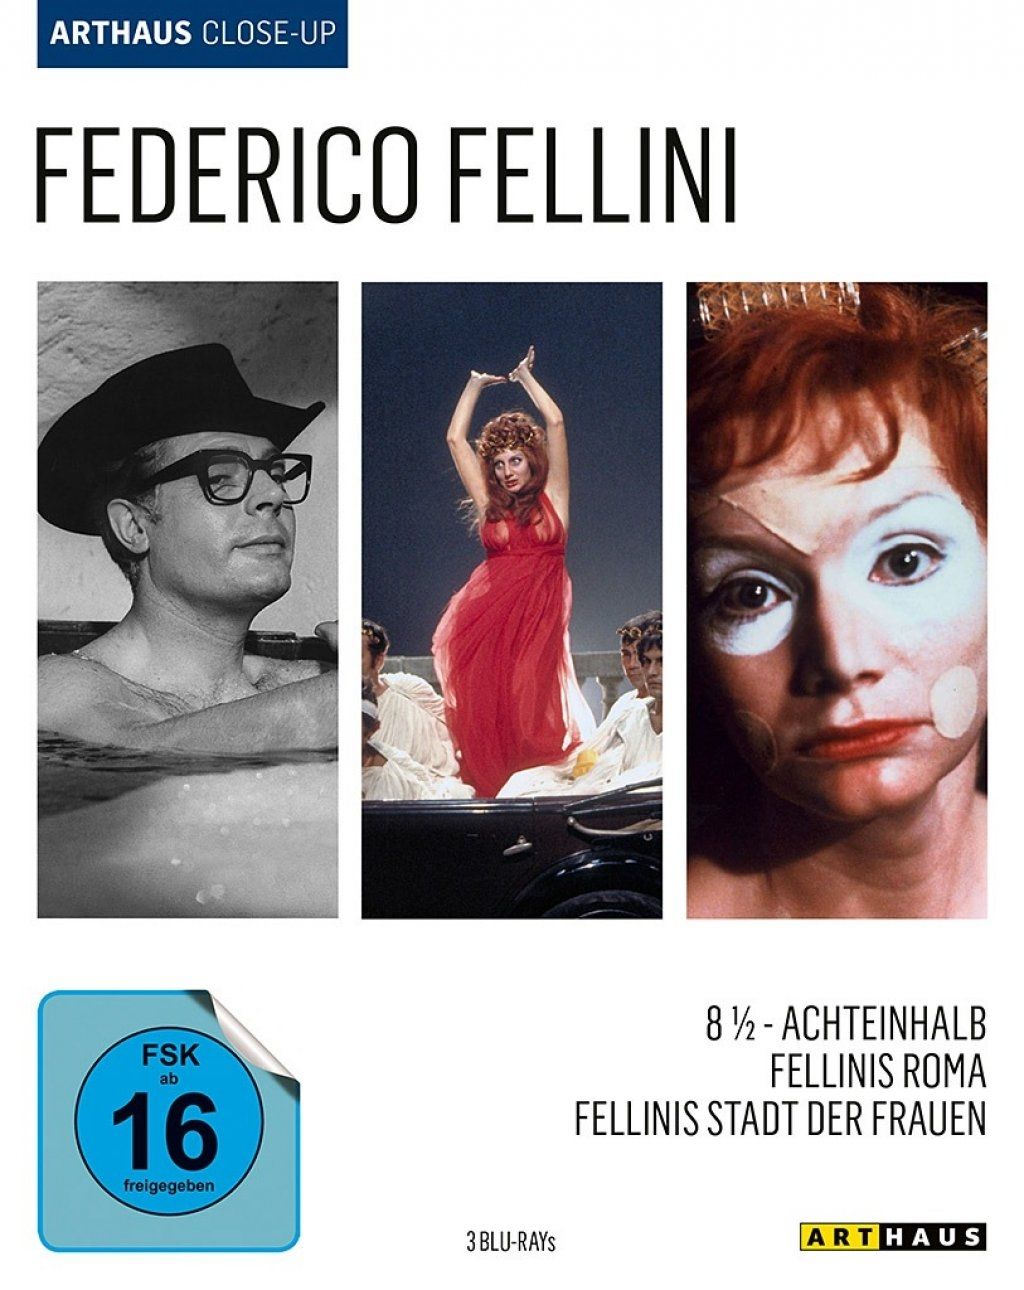 Achteinhalb - 8 1/2 / Fellinis Roma / Fellinis Stadt der Frauen (Federico Fellini - Arthaus Close-Up) (3 Discs) (BLURAY)